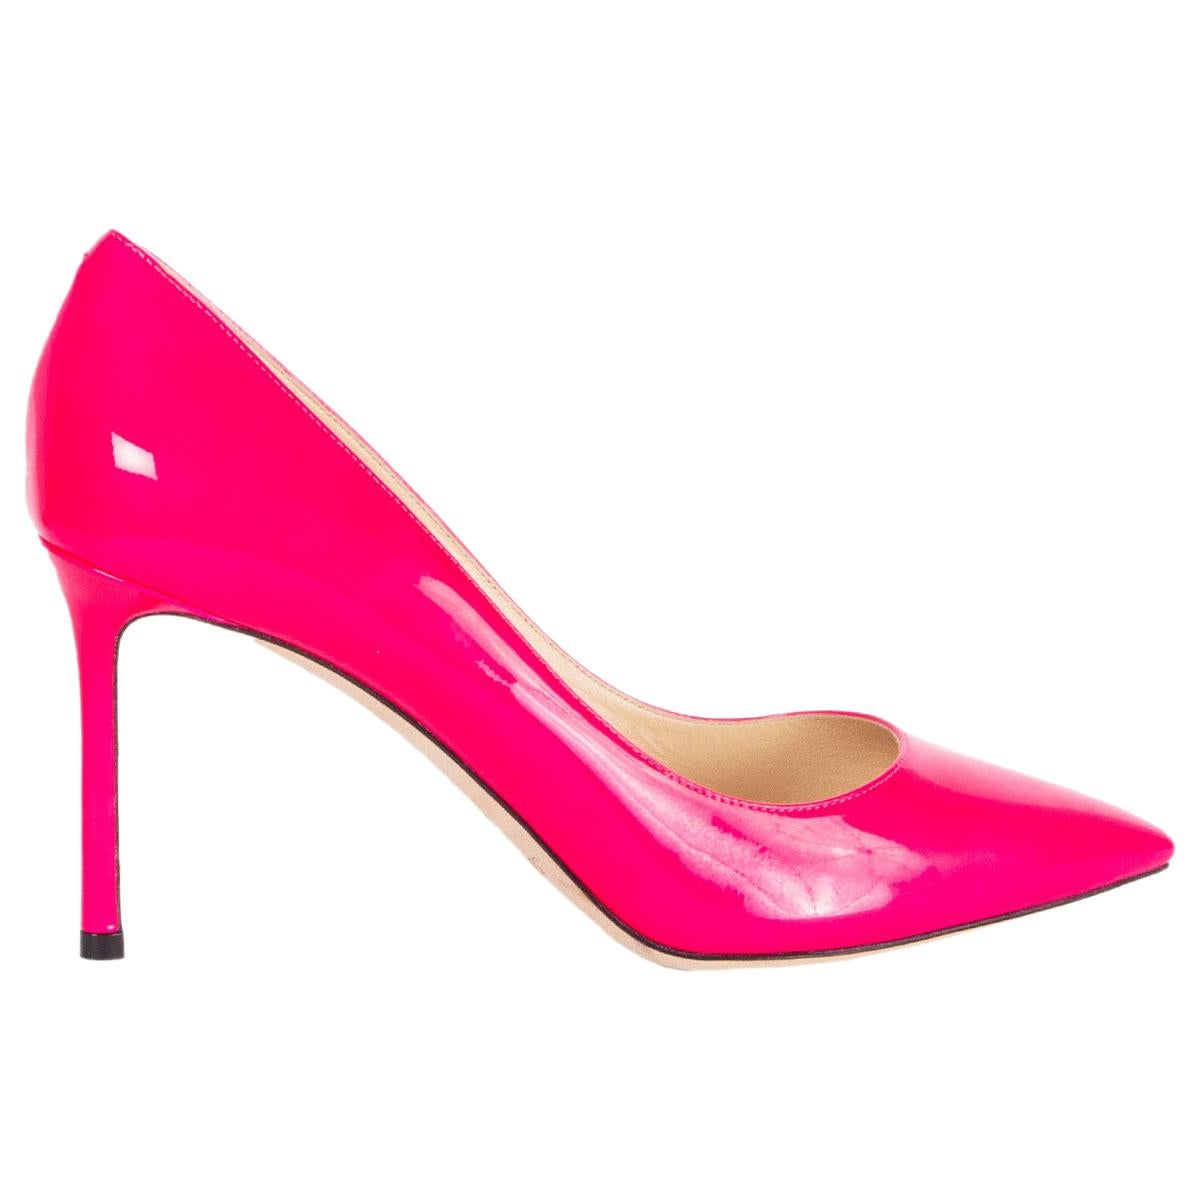 JIMMY CHOO Heißes rosa Lackleder ROMY 85 POINTED-TOE Pumps Schuhe 39,5 im Angebot